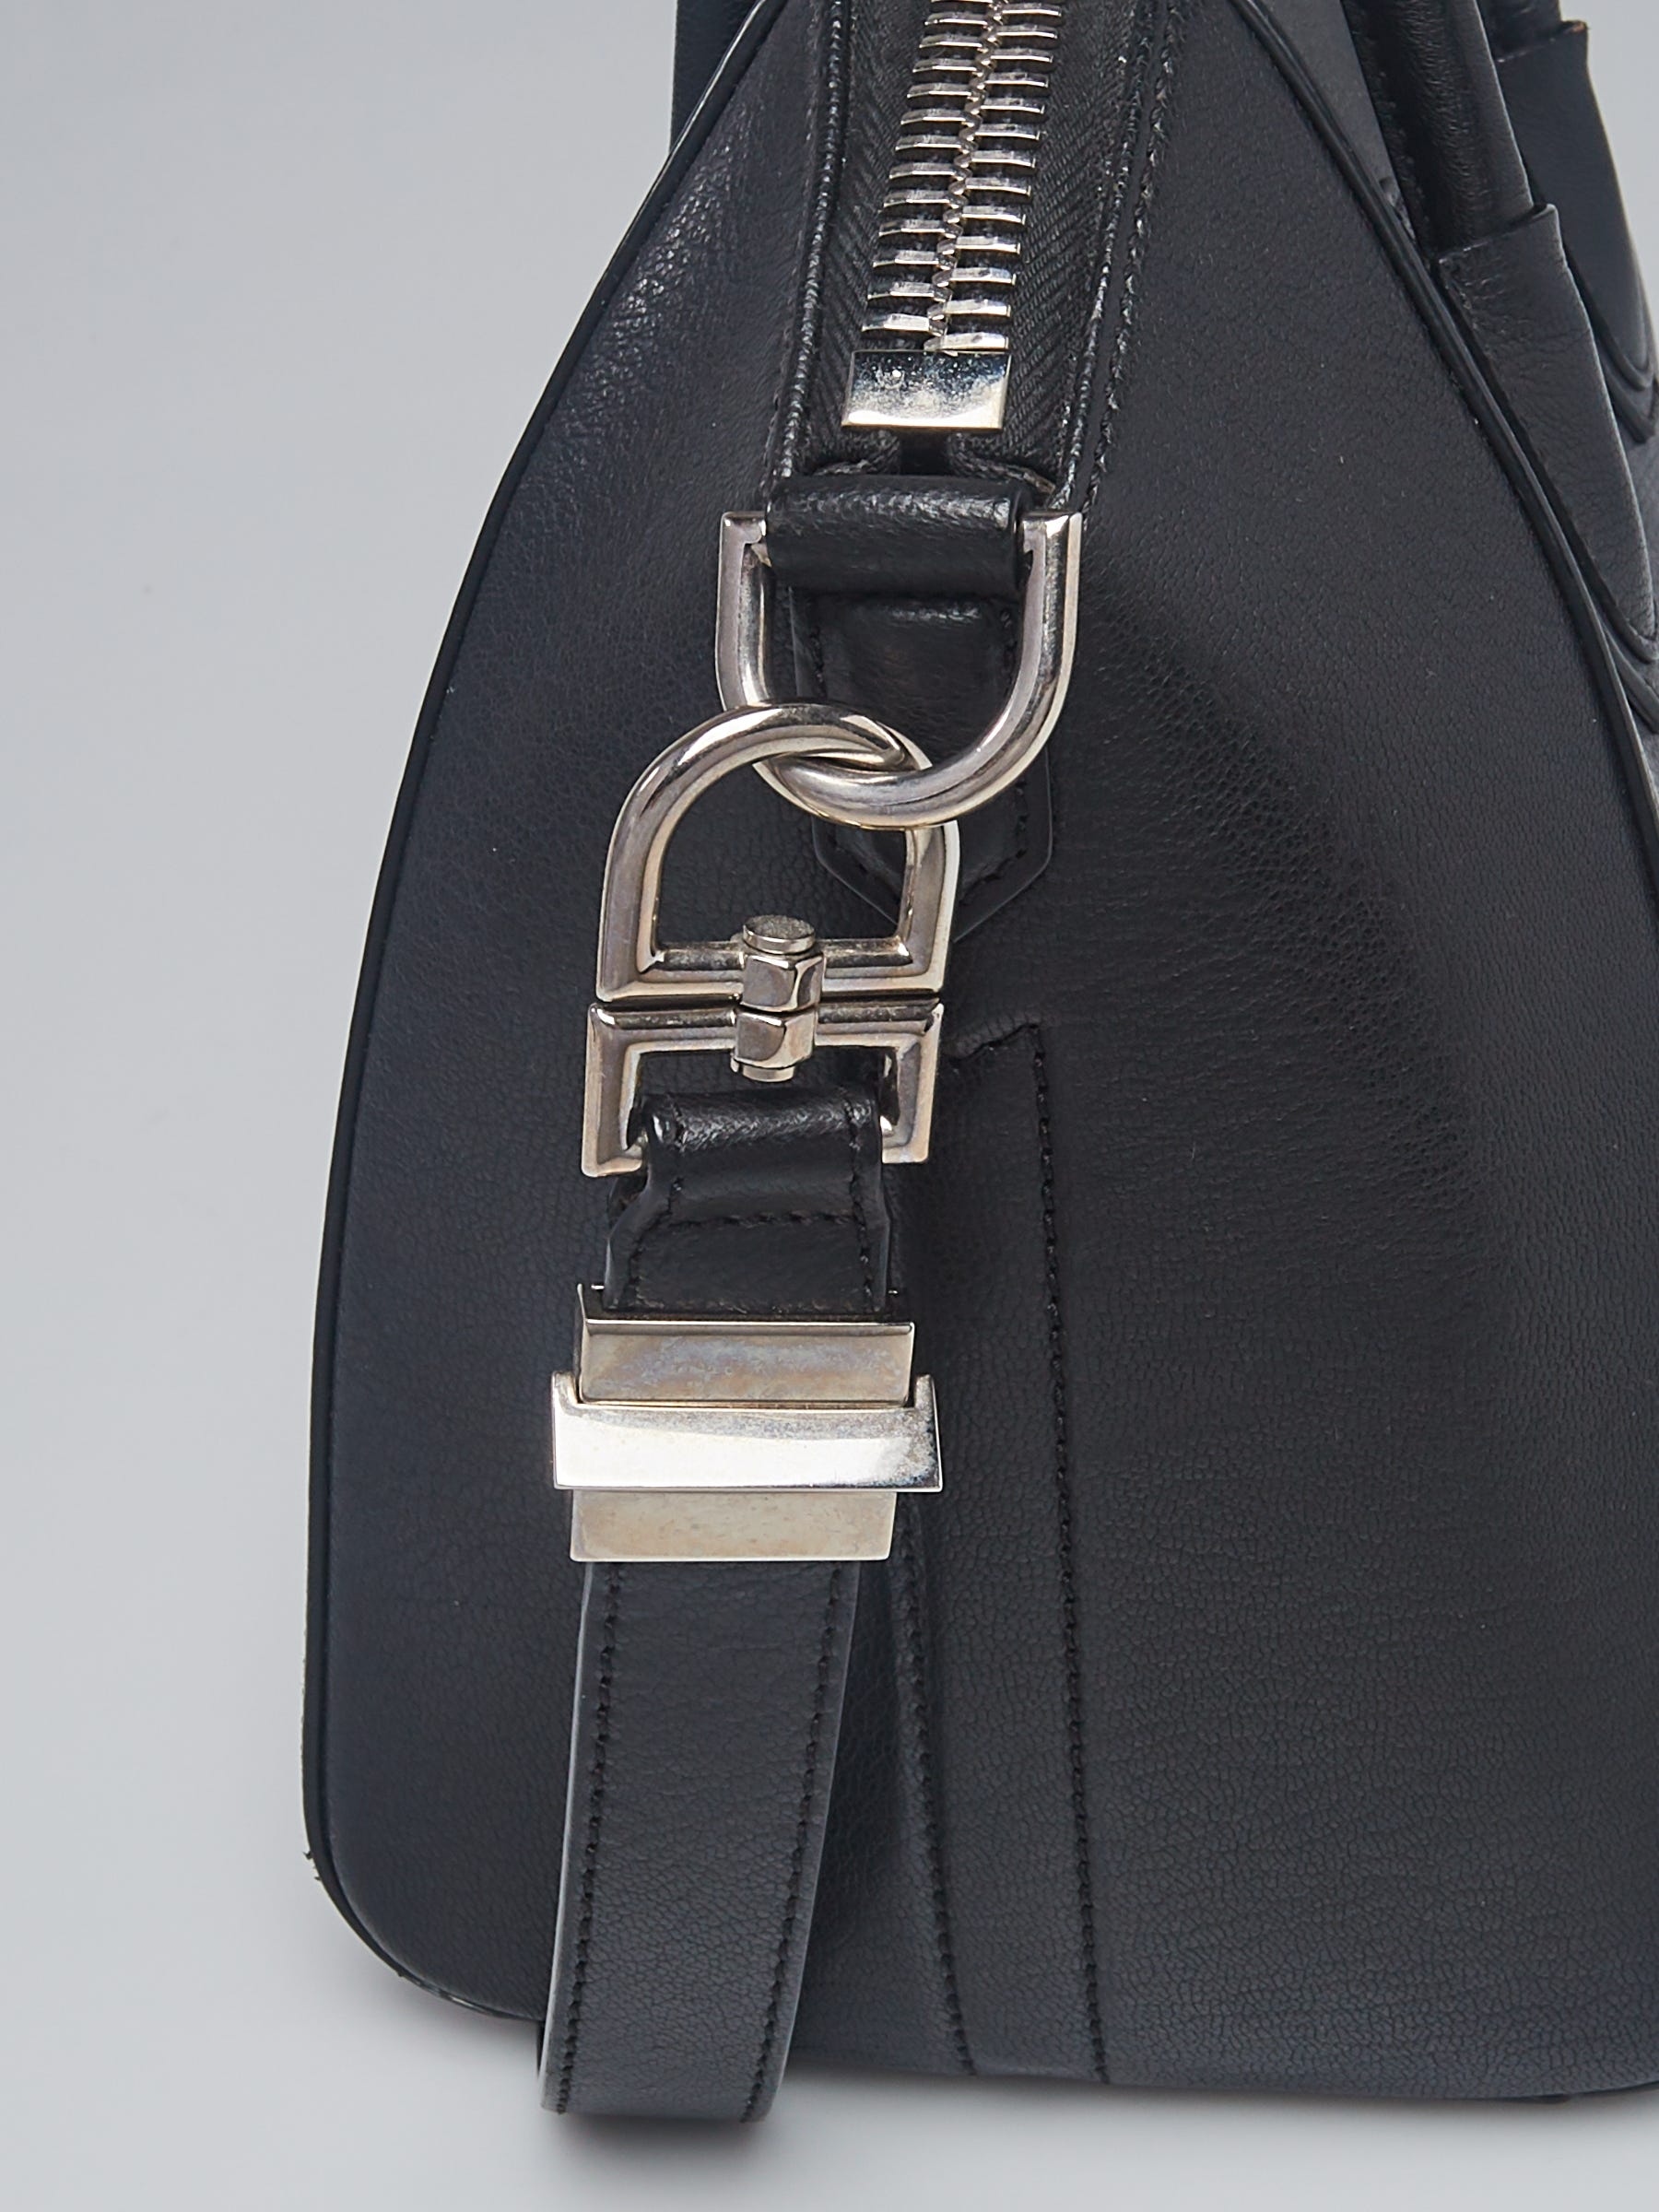 Givenchy Antigona Shoulder Bag Small Black Leather